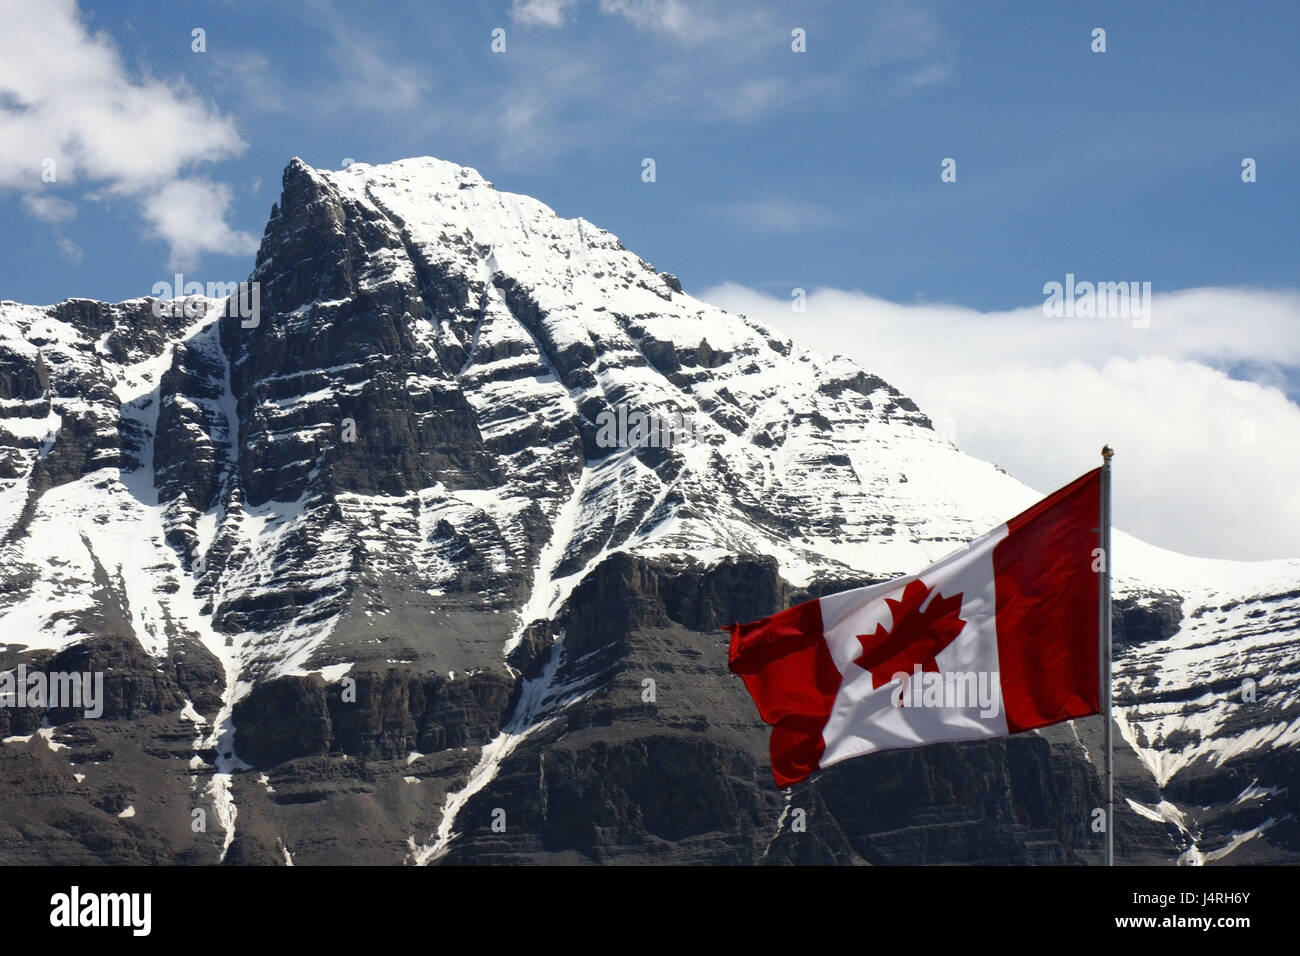 Flag, Canadian, flutter, mountain scenery, summit, snowy, Canada, province, Alberta, Banff Nationwide park, Rocky Mountains, Saskatchewan River Crossing, Stock Photo